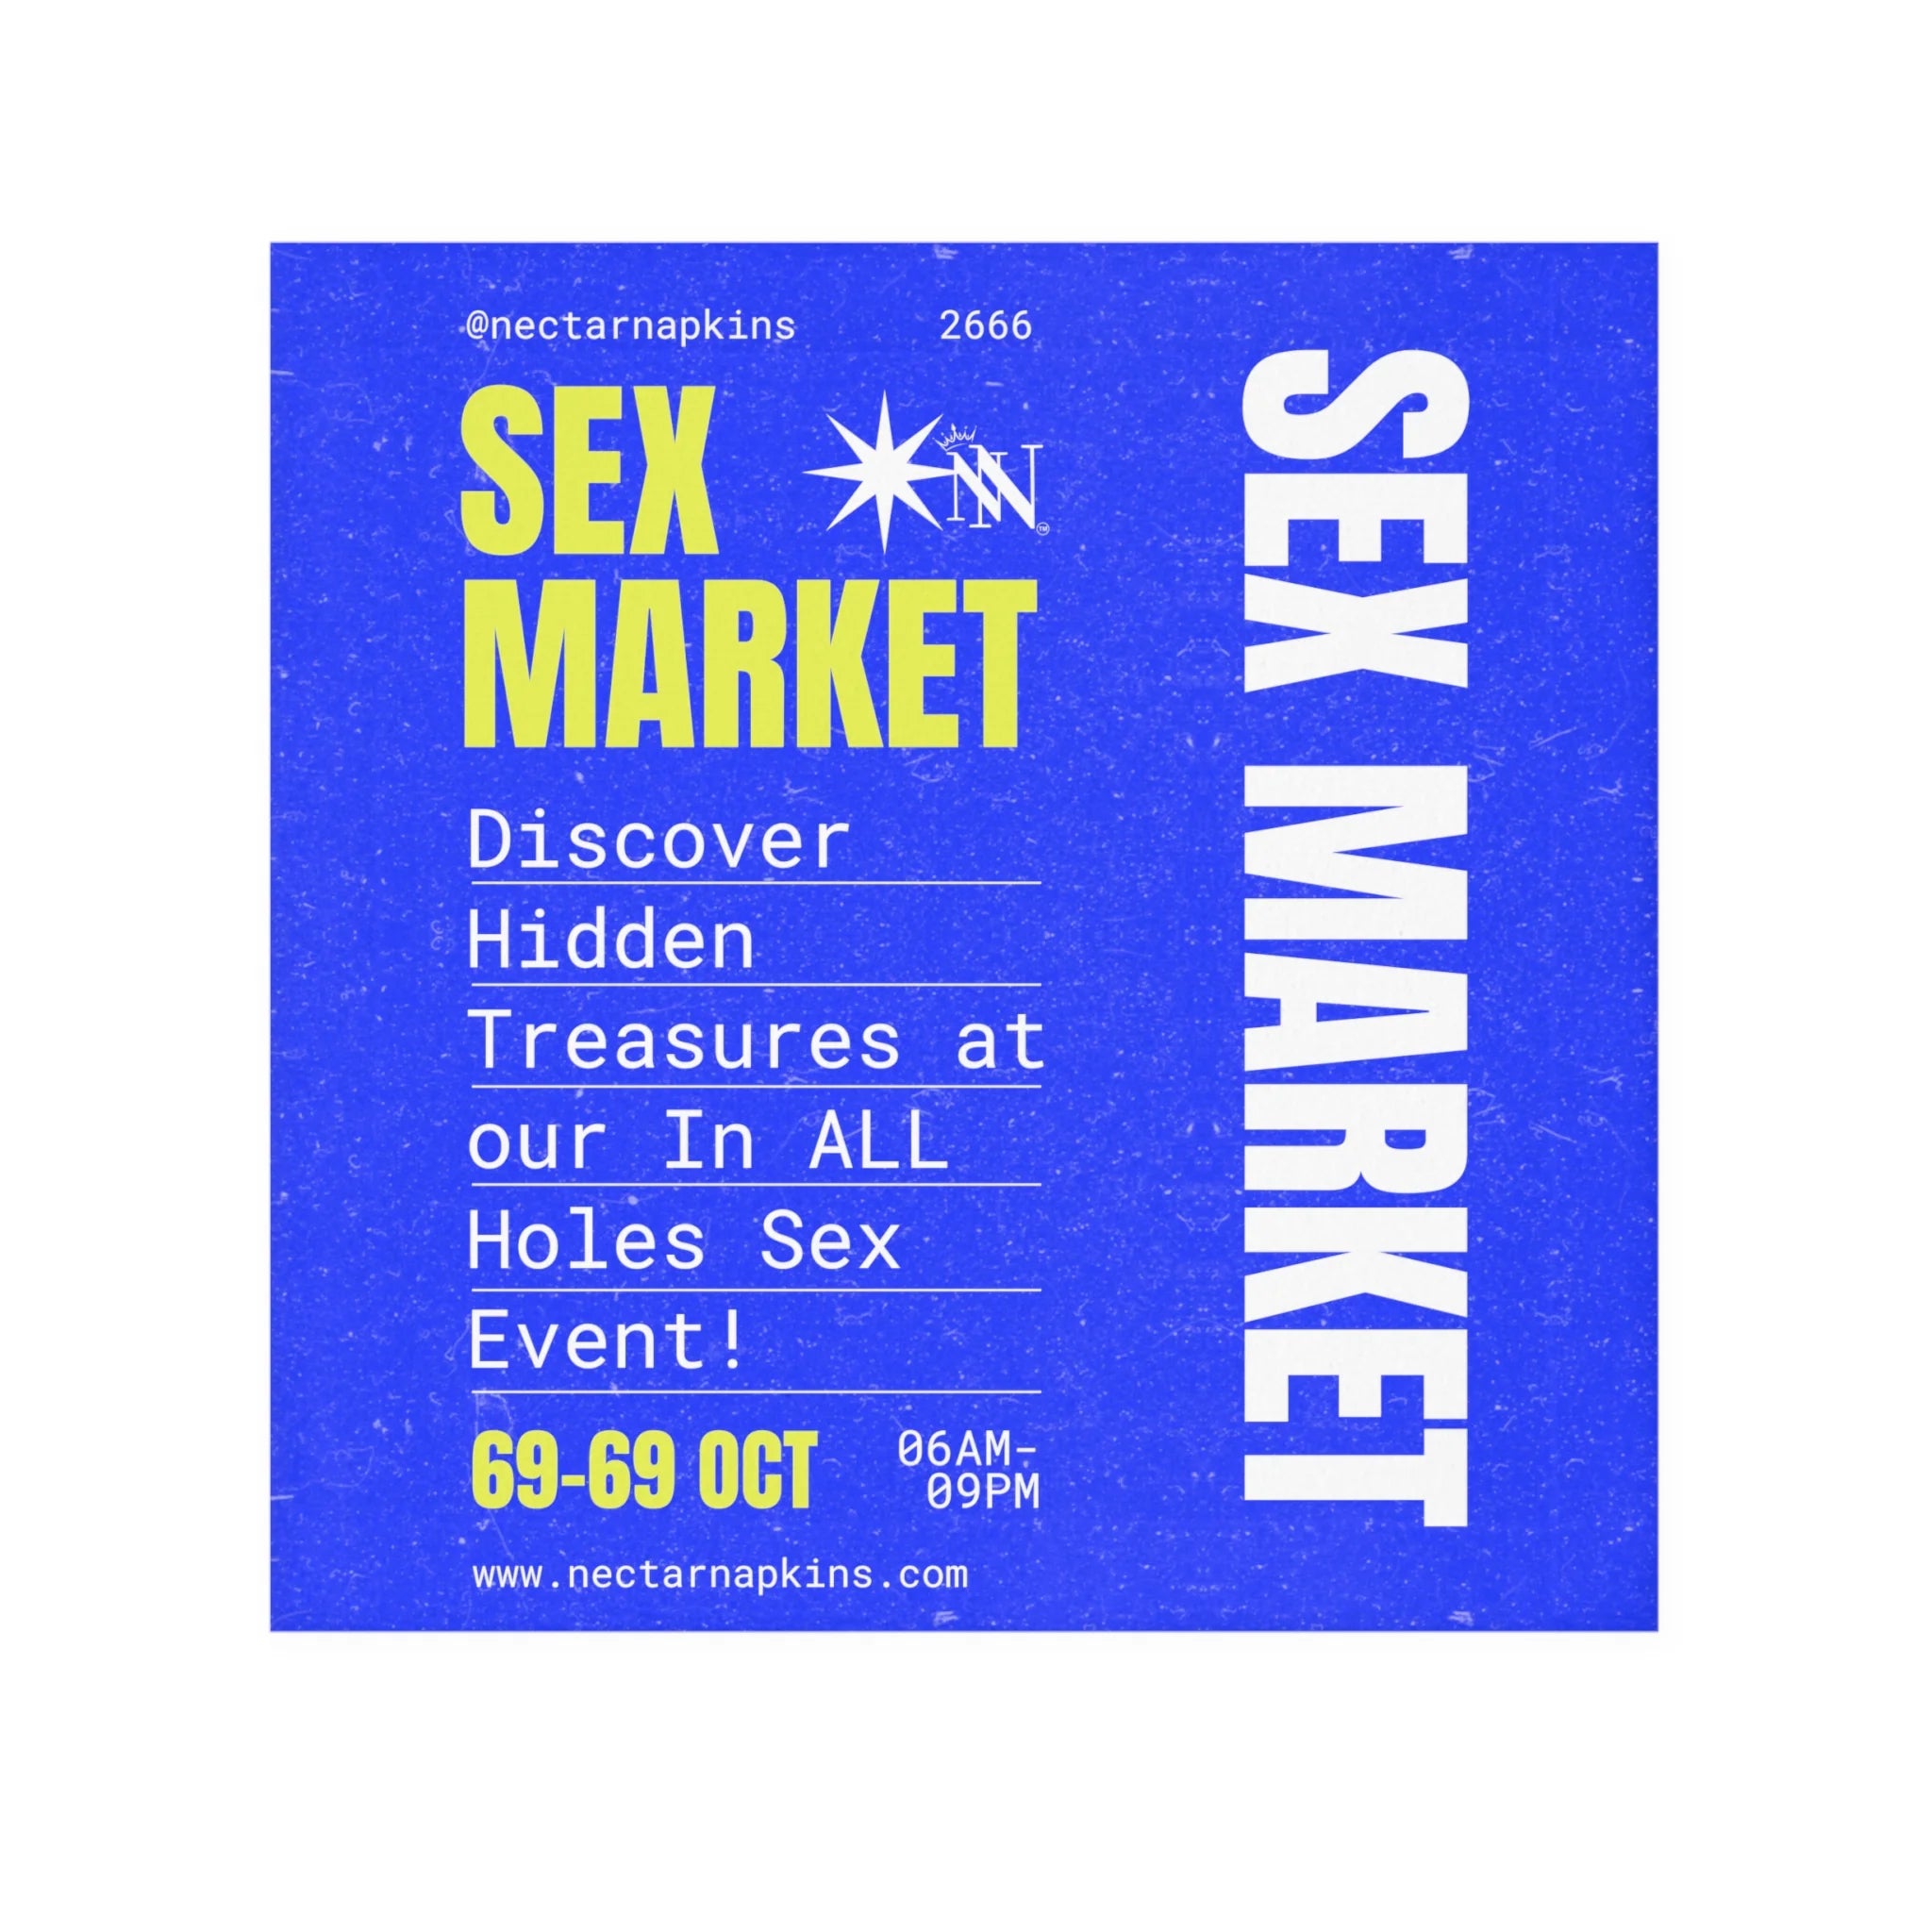 cum towel sex market